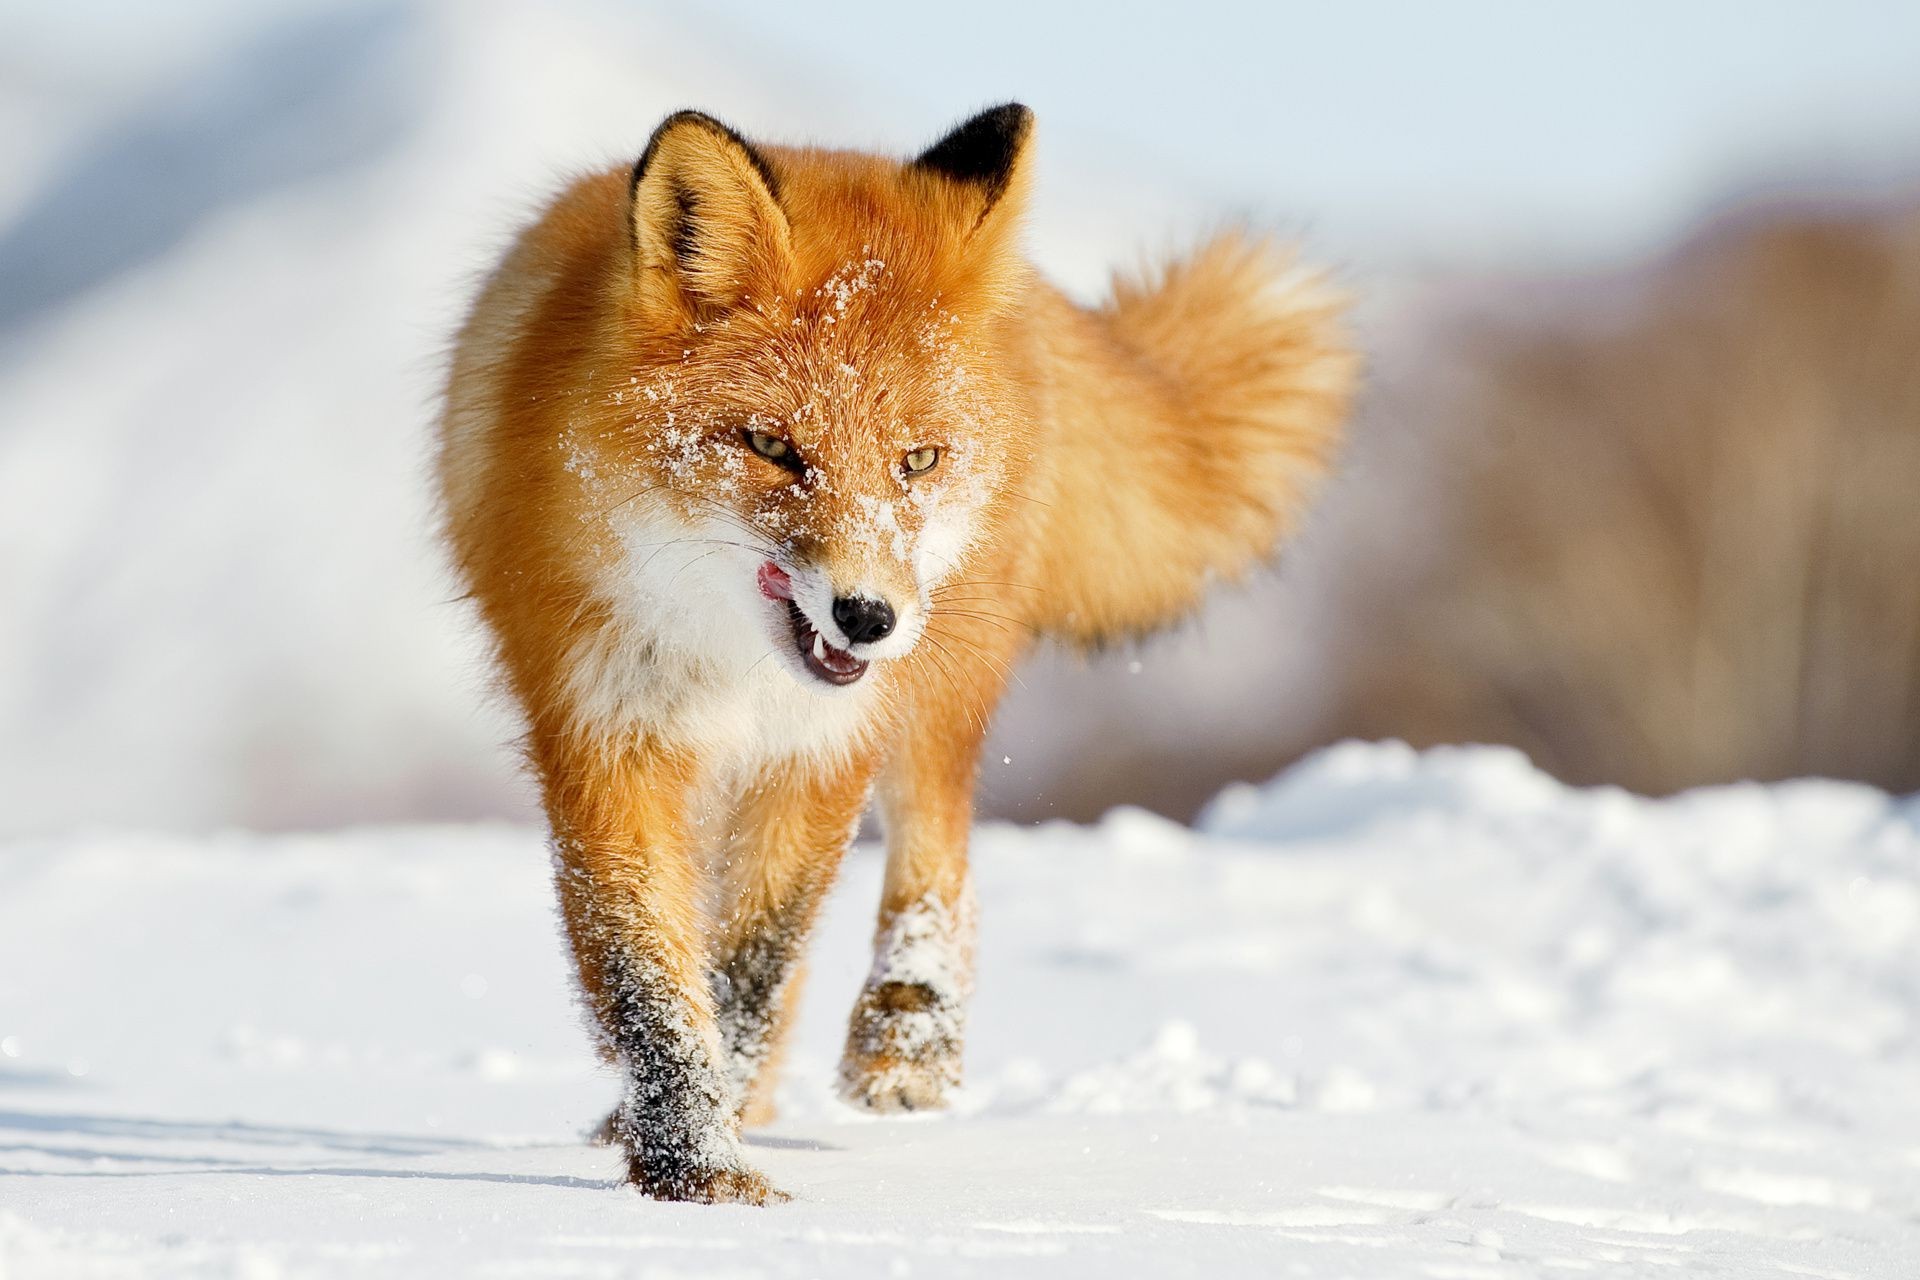 fox snow winter mammal wildlife fur outdoors nature animal cold frosty wild canine